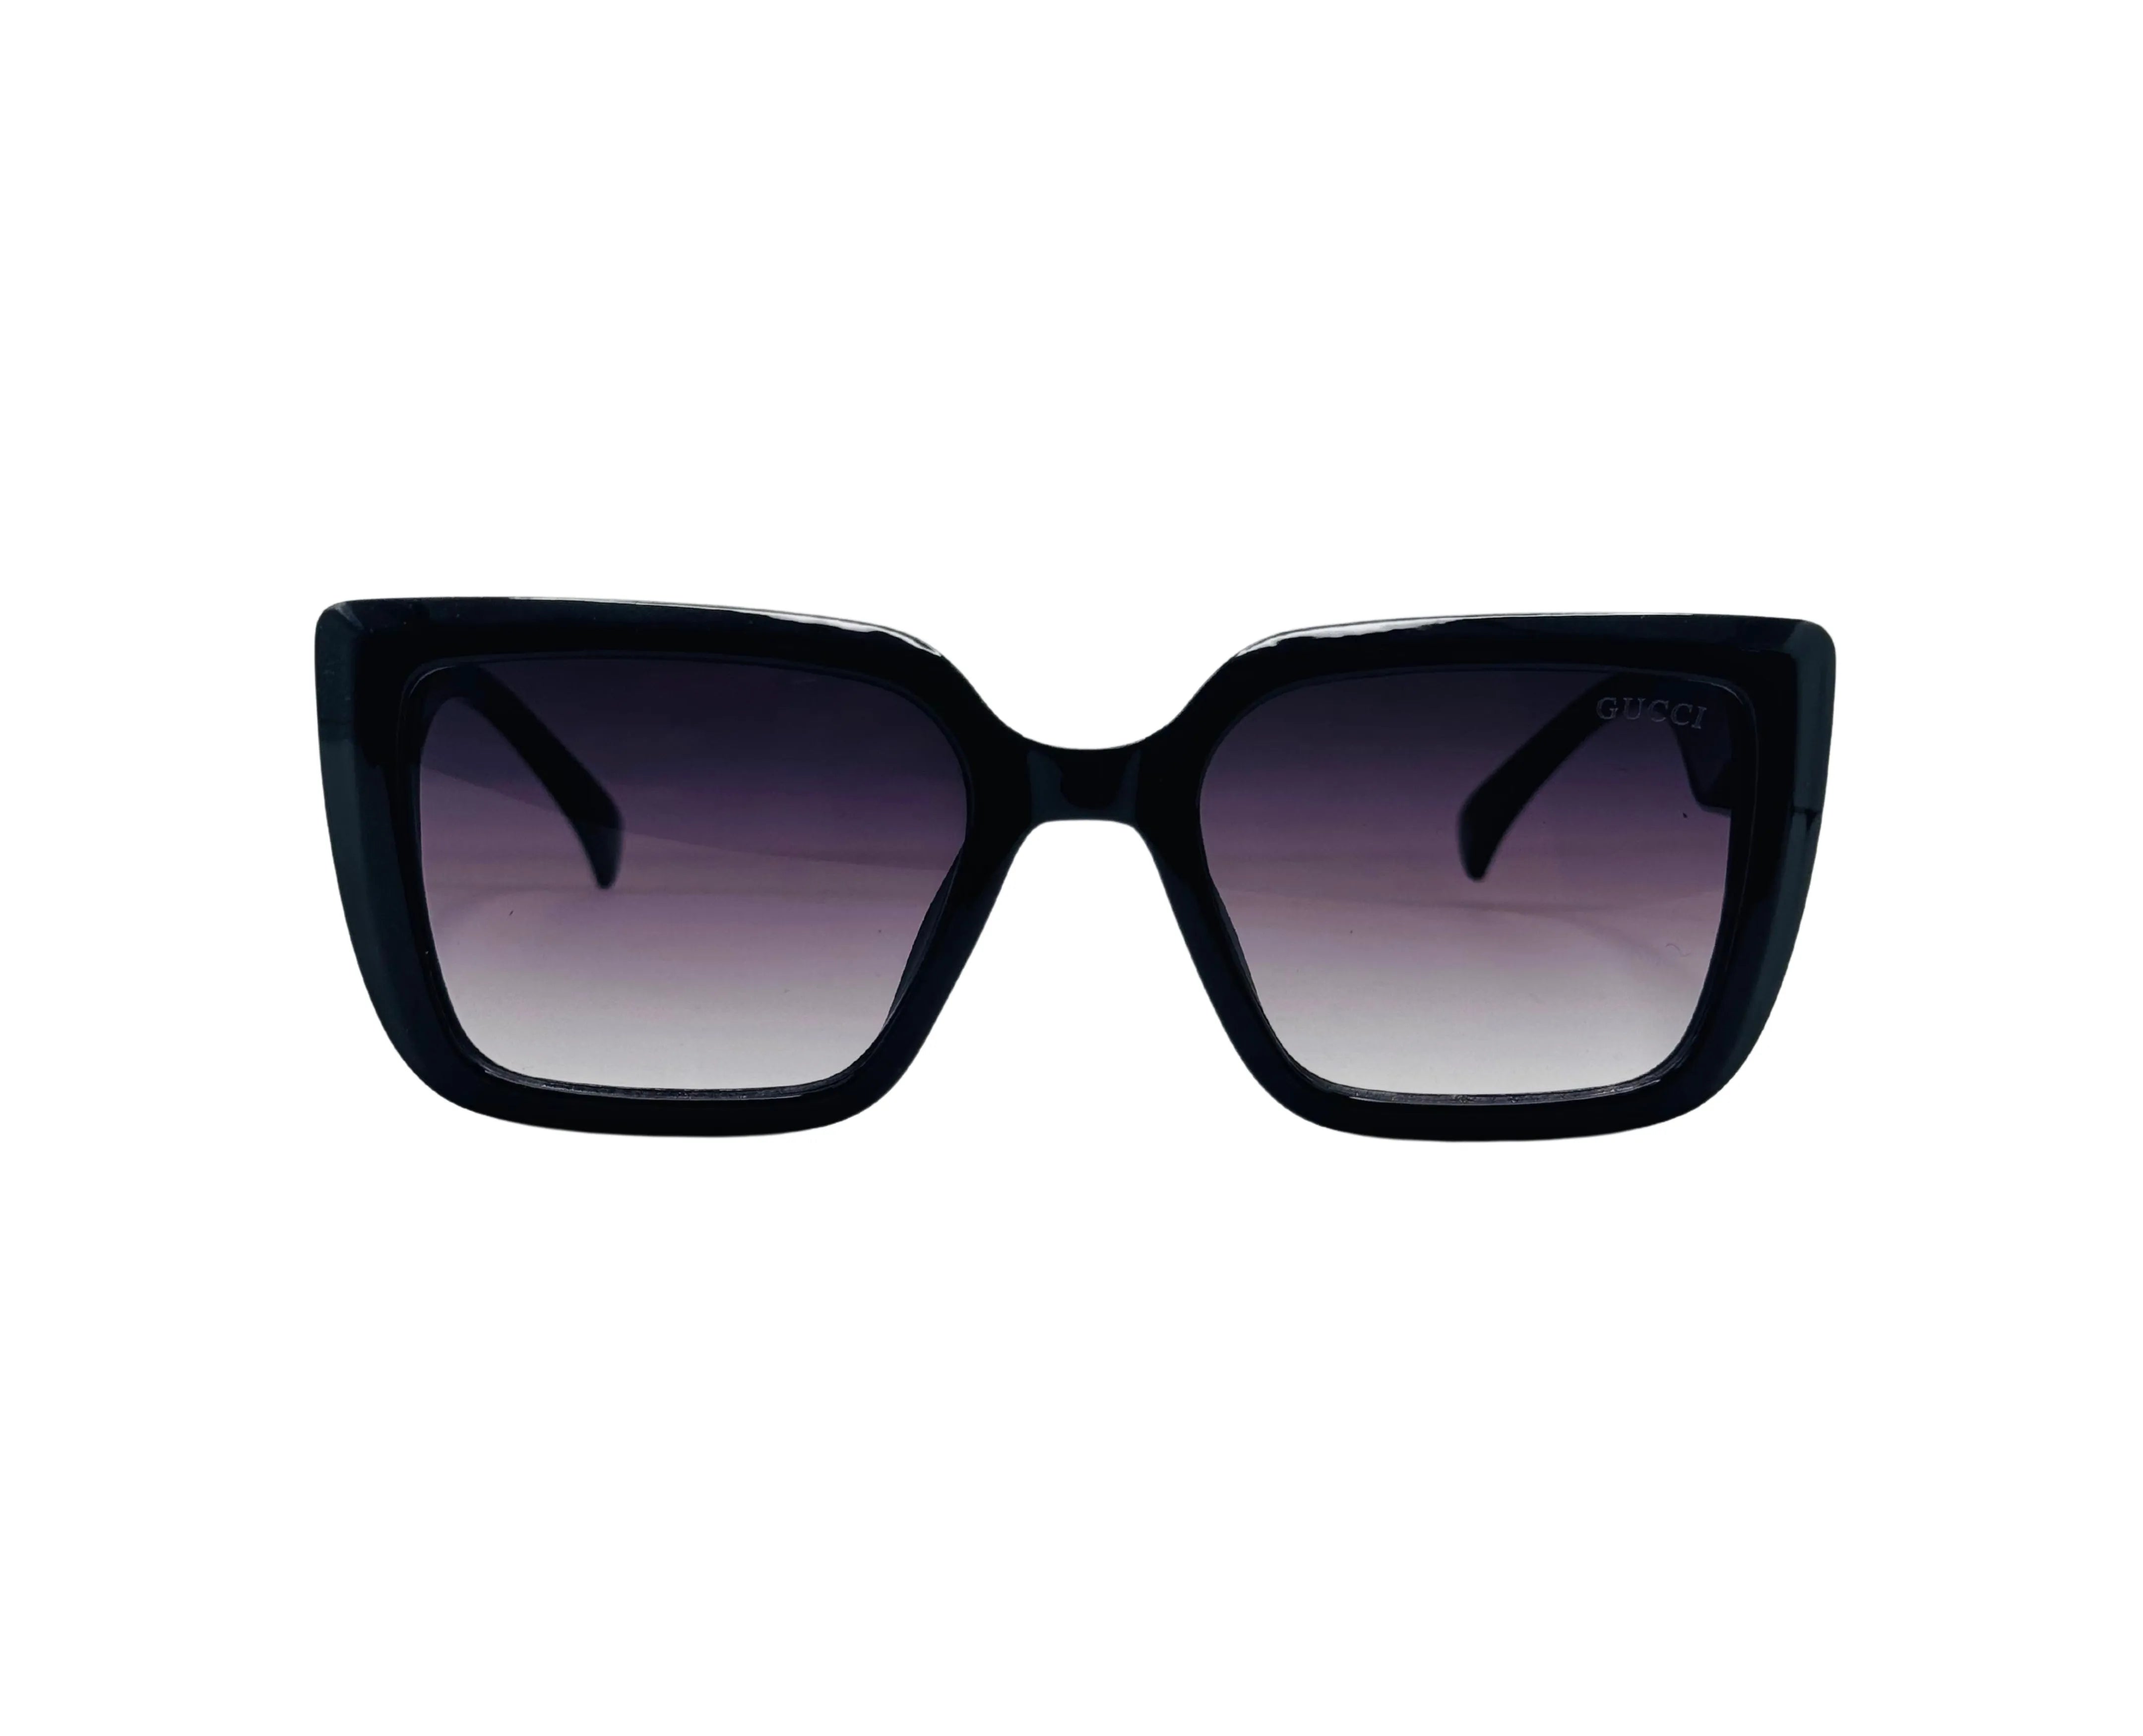 NS Deluxe - 9086 - Black - Sunglasses